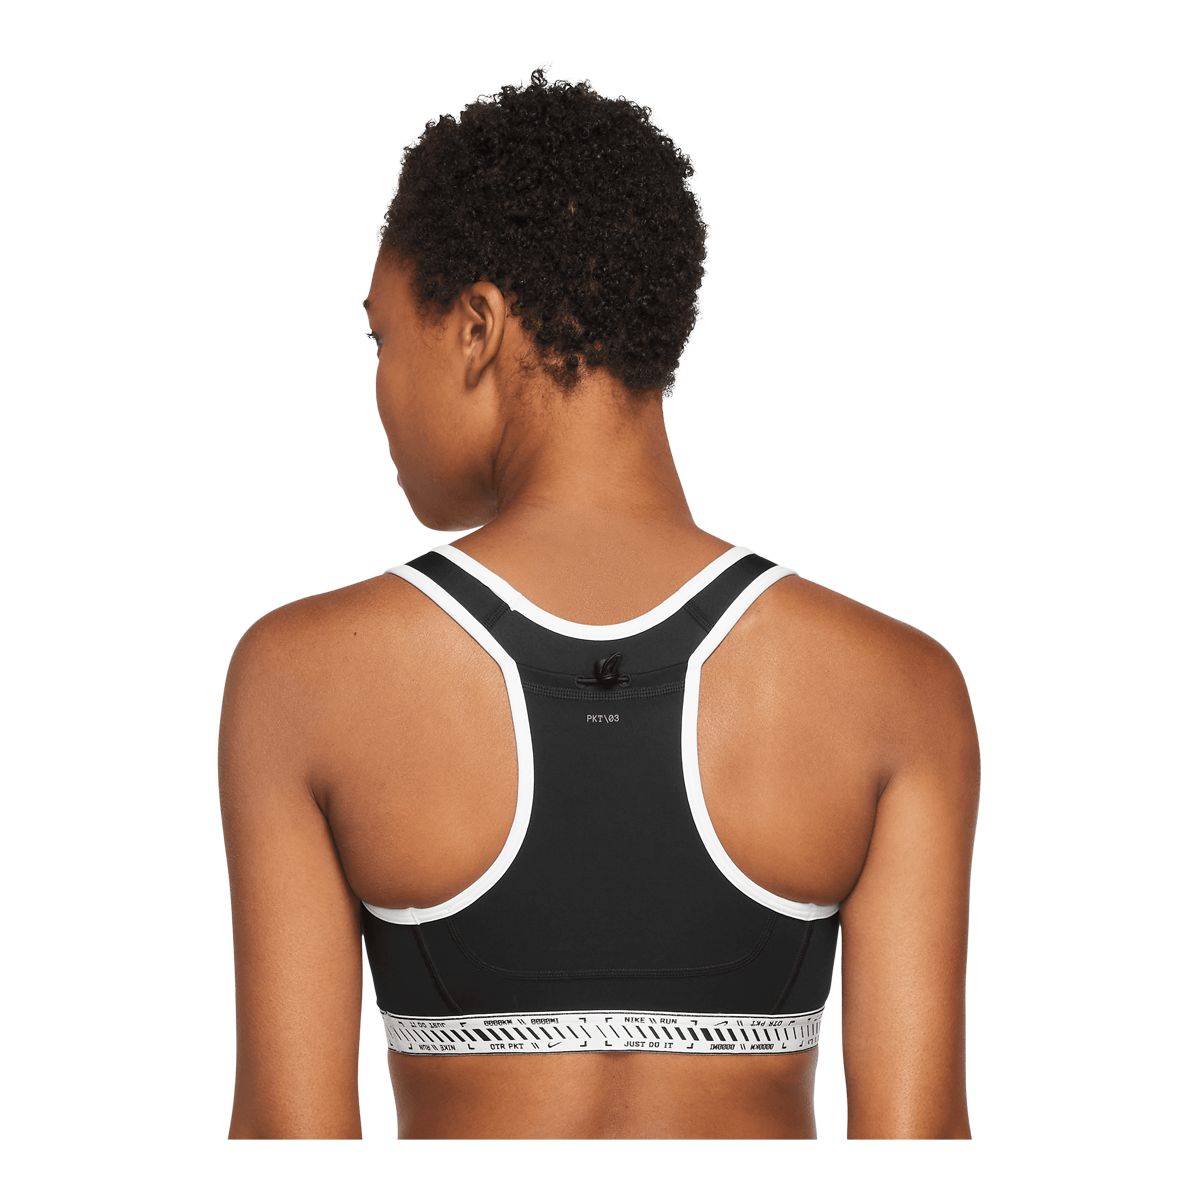 Nike Pro Dri-fit pink sports bra size XS Black Tick Bargain Selling Cheap